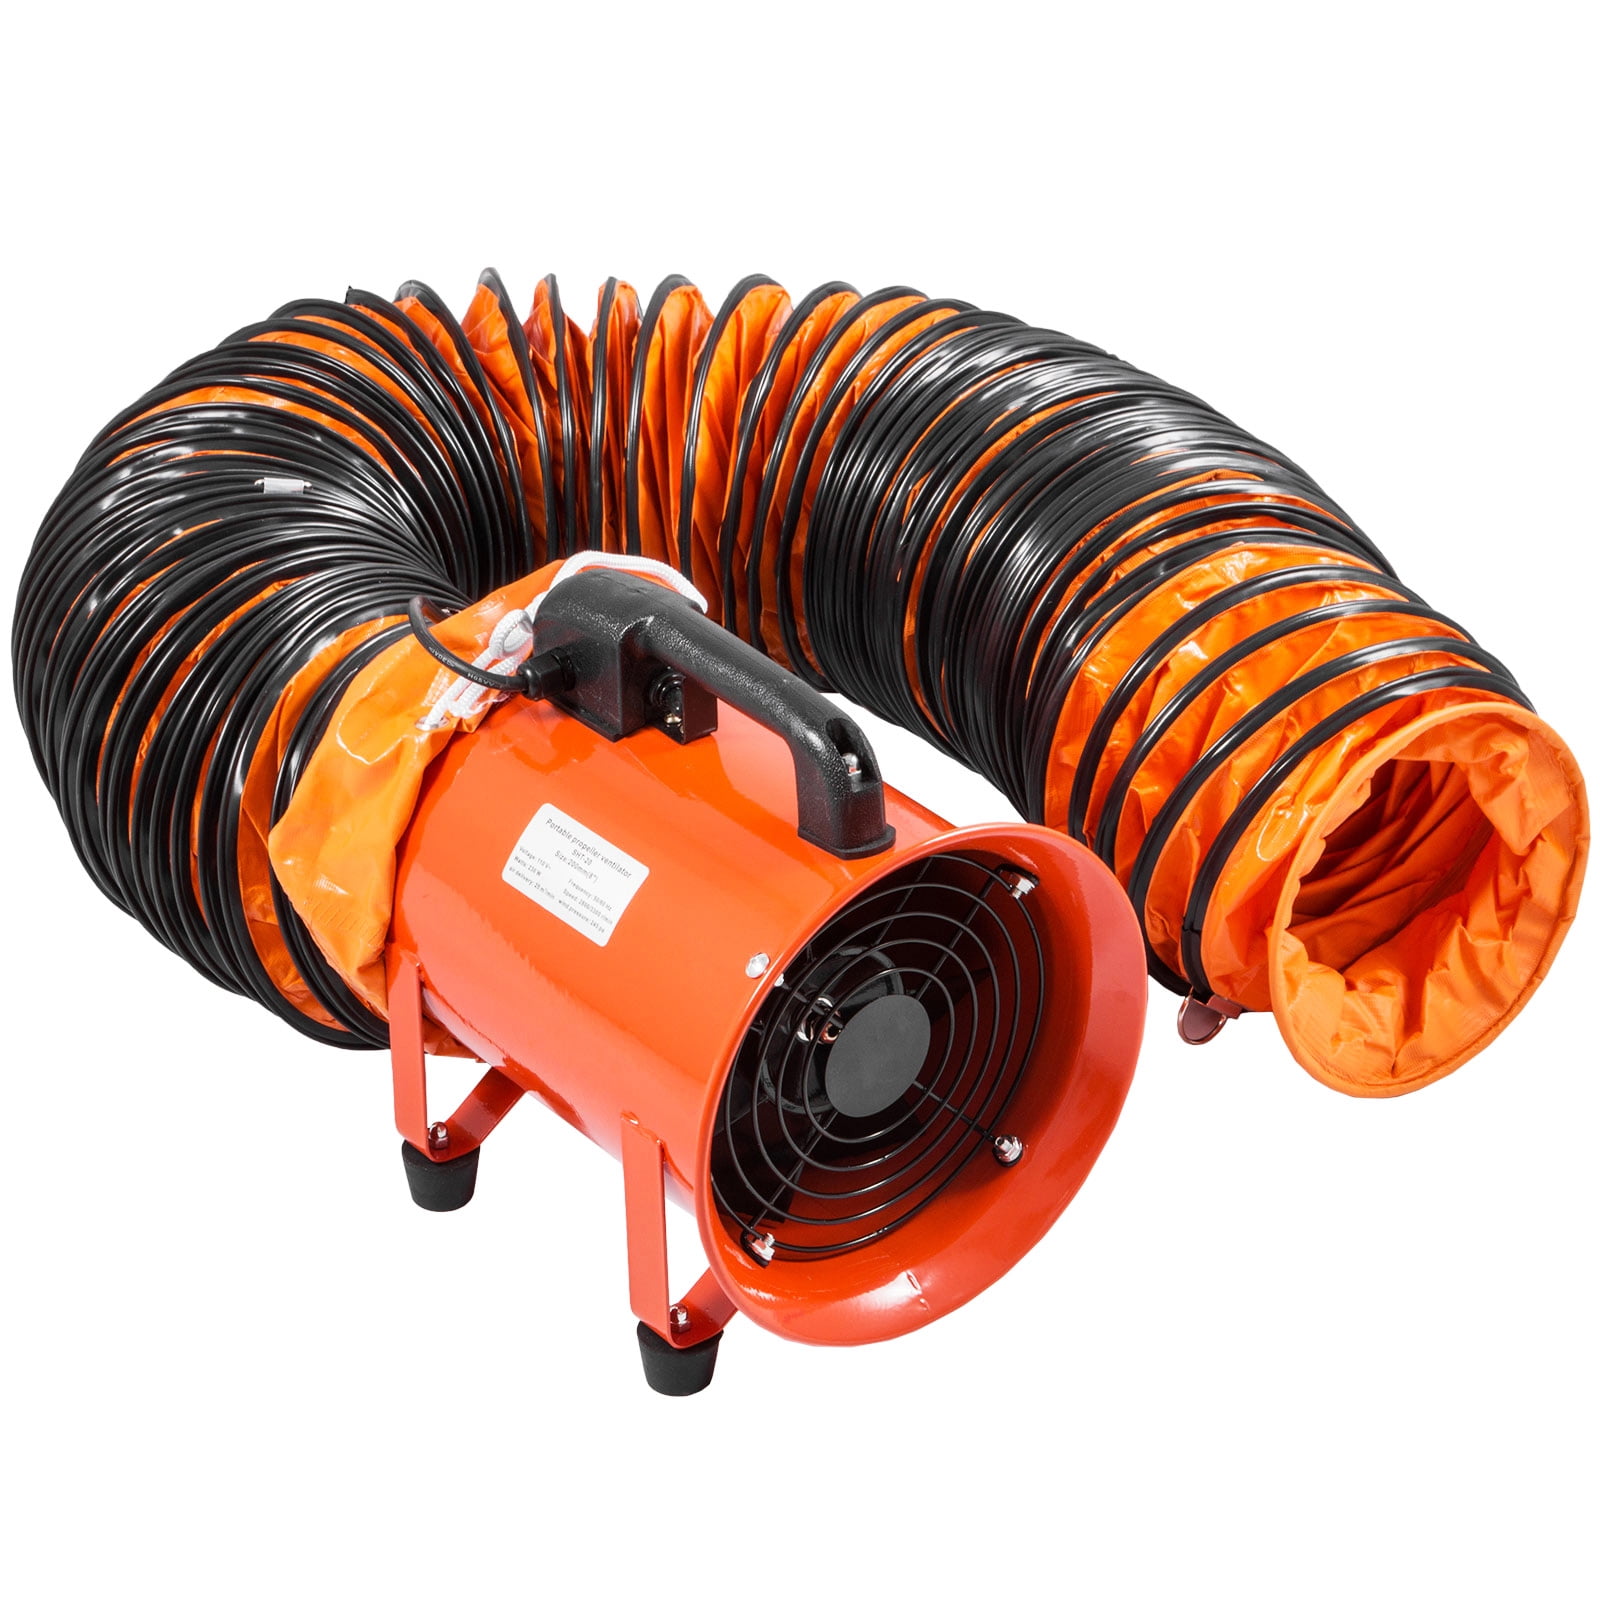 5102602 - Compact hot air blower 230V/3100W